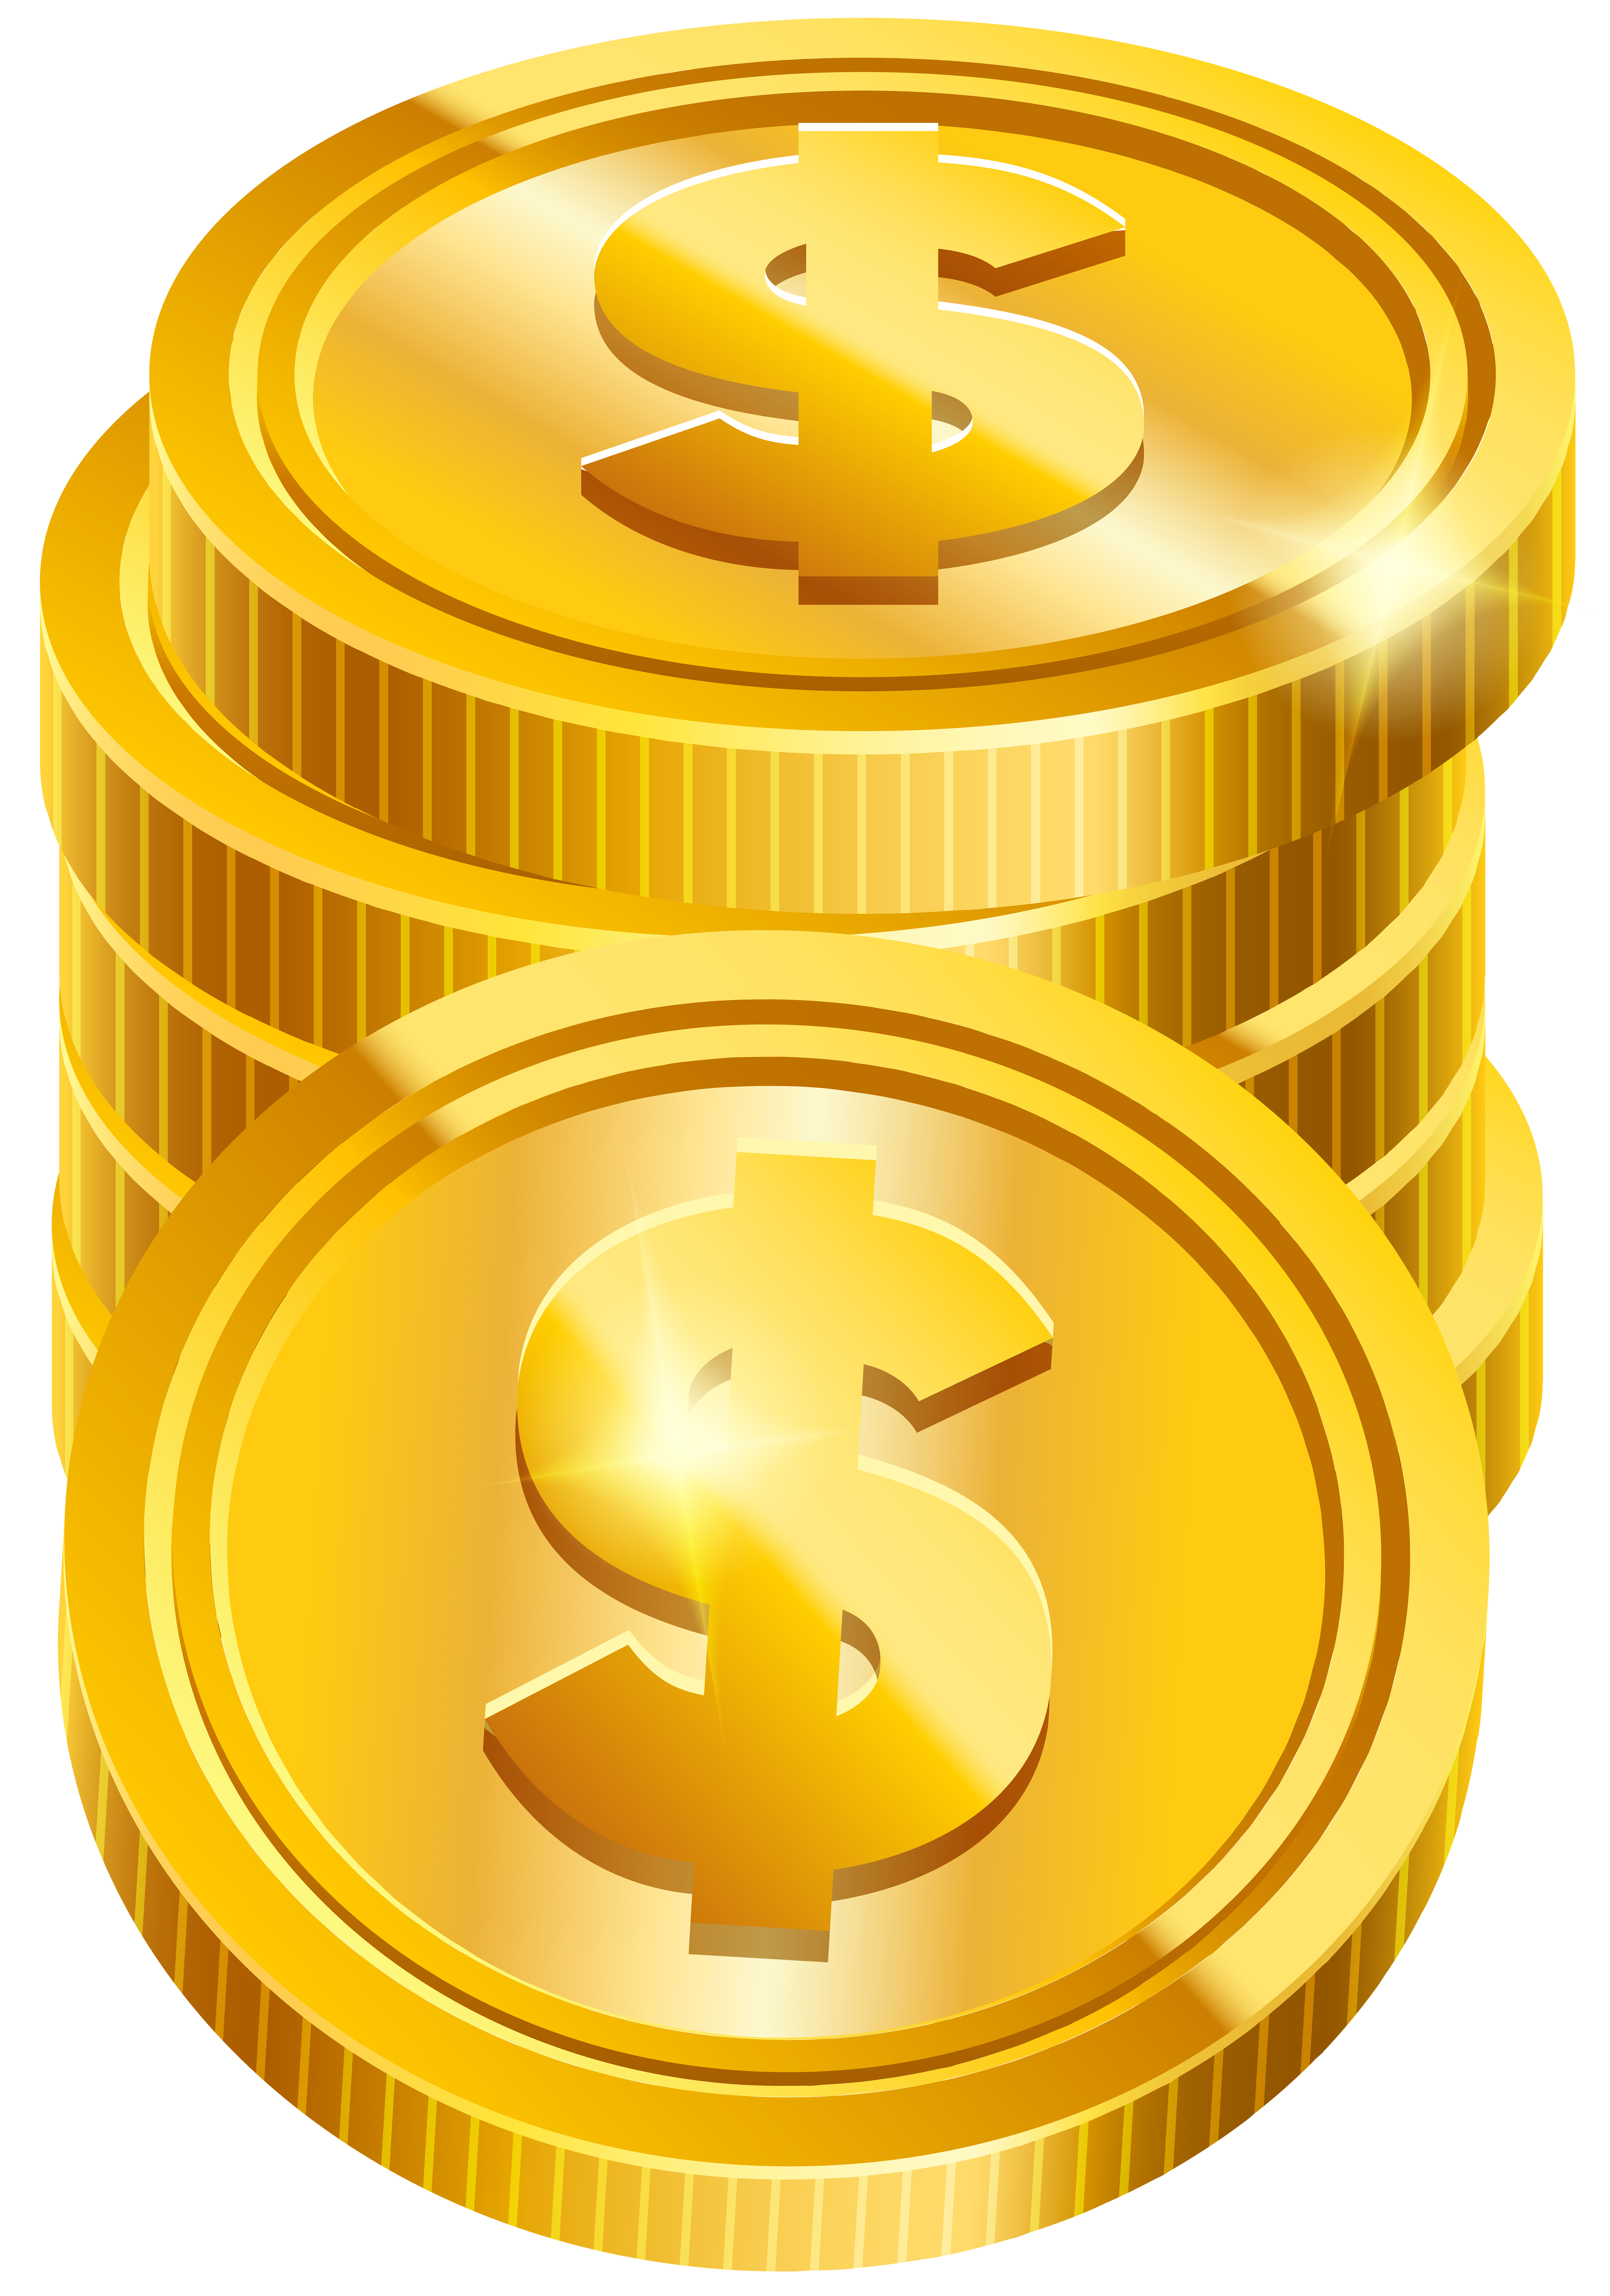 Coin Money Coins Transparent Png Clip Art Image Png Download 5611